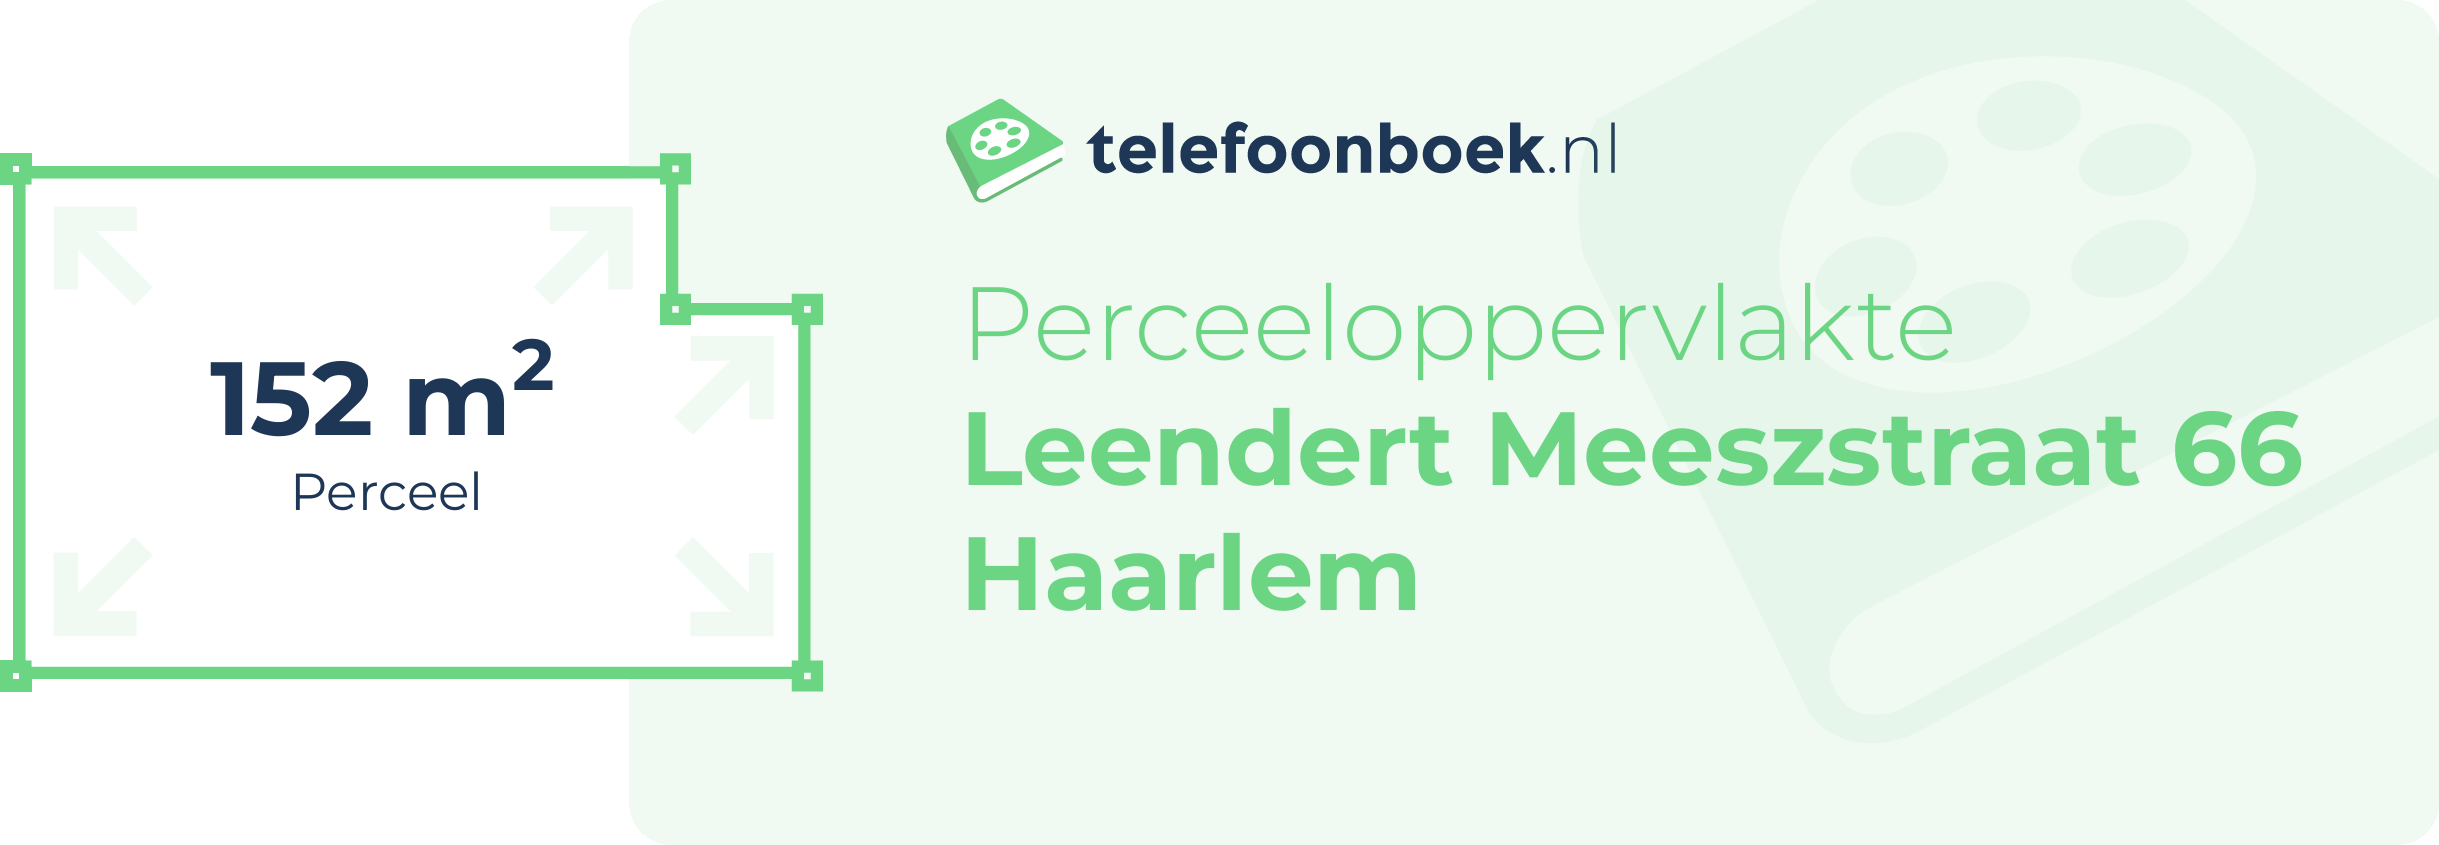 Perceeloppervlakte Leendert Meeszstraat 66 Haarlem